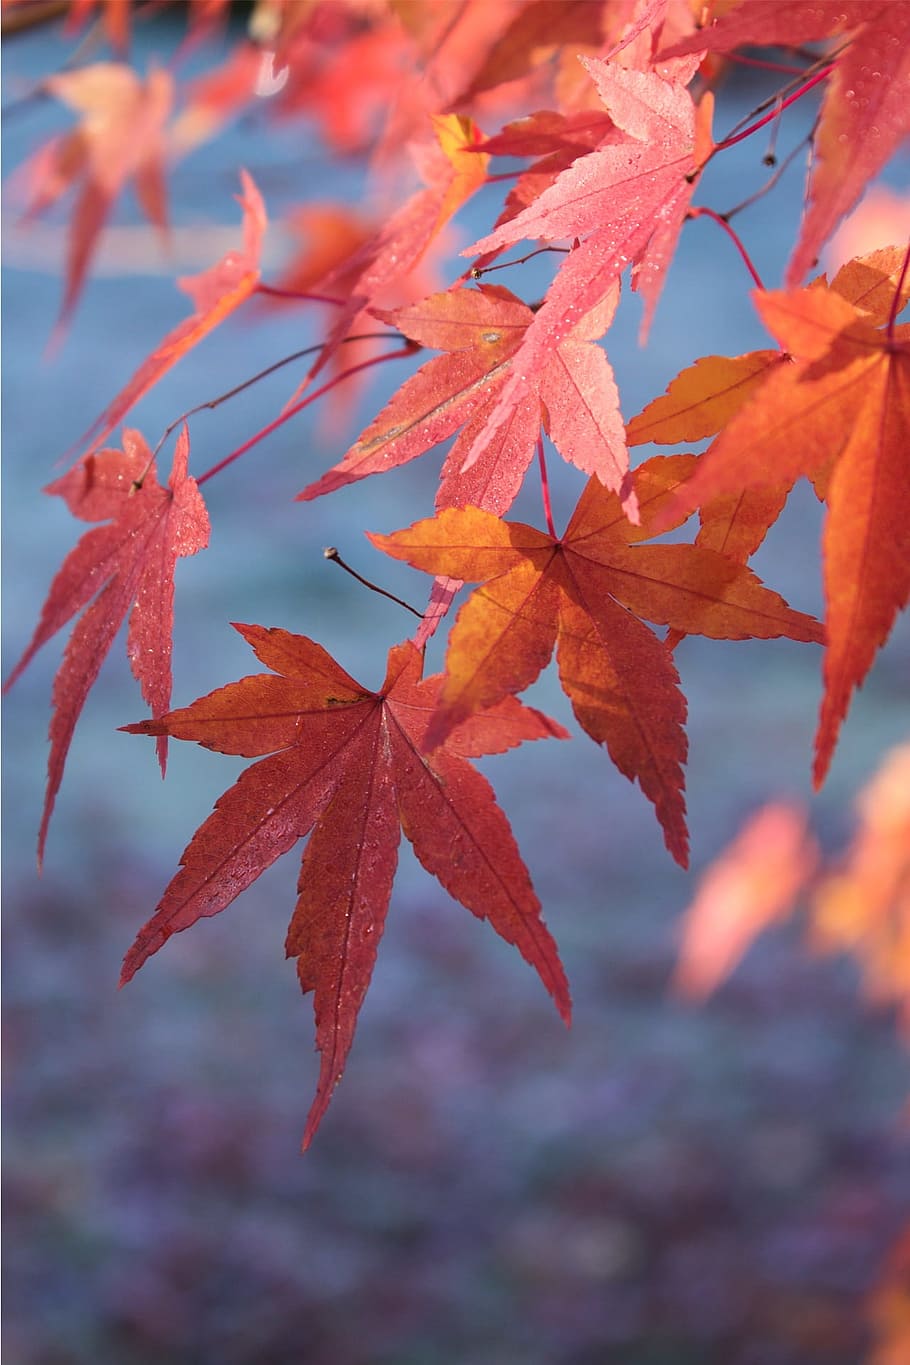 Autumn, Leaves, Orange, Frost, Fall, autumn, leaves, nature, red, season, maple